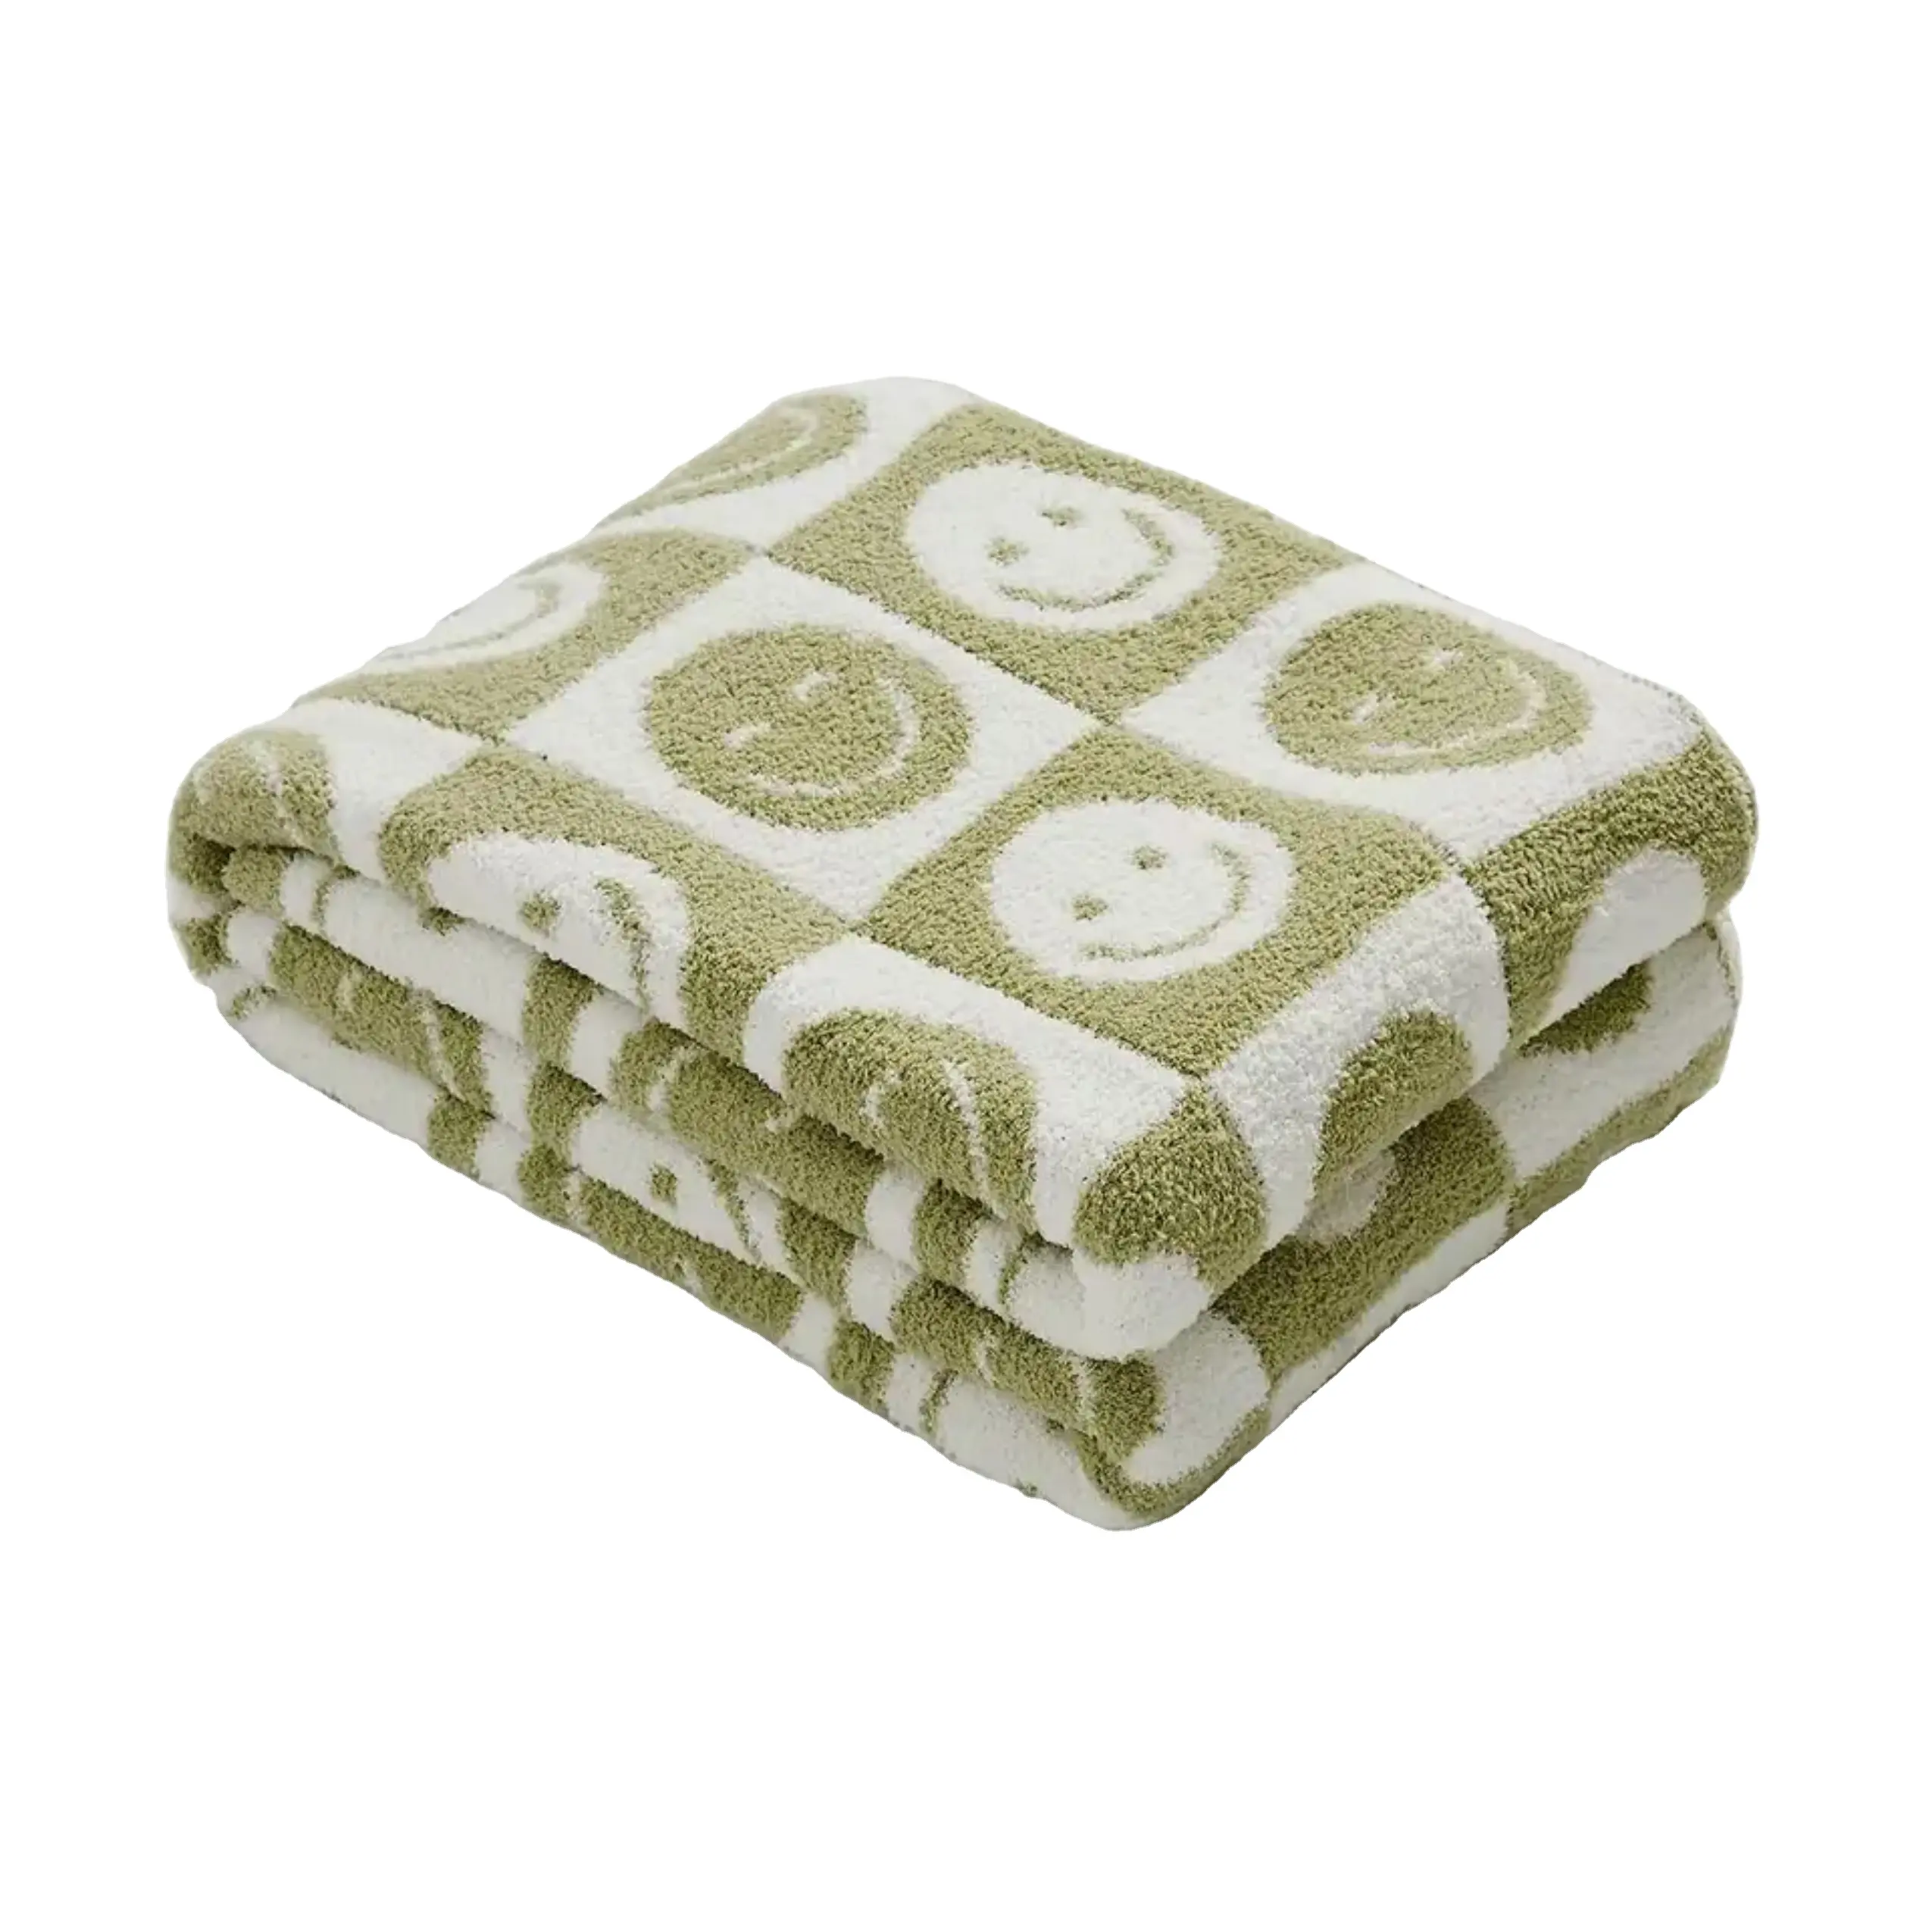 Cobertor de lã Sherpa para sofá 100% poliéster lavável à máquina AZO Free